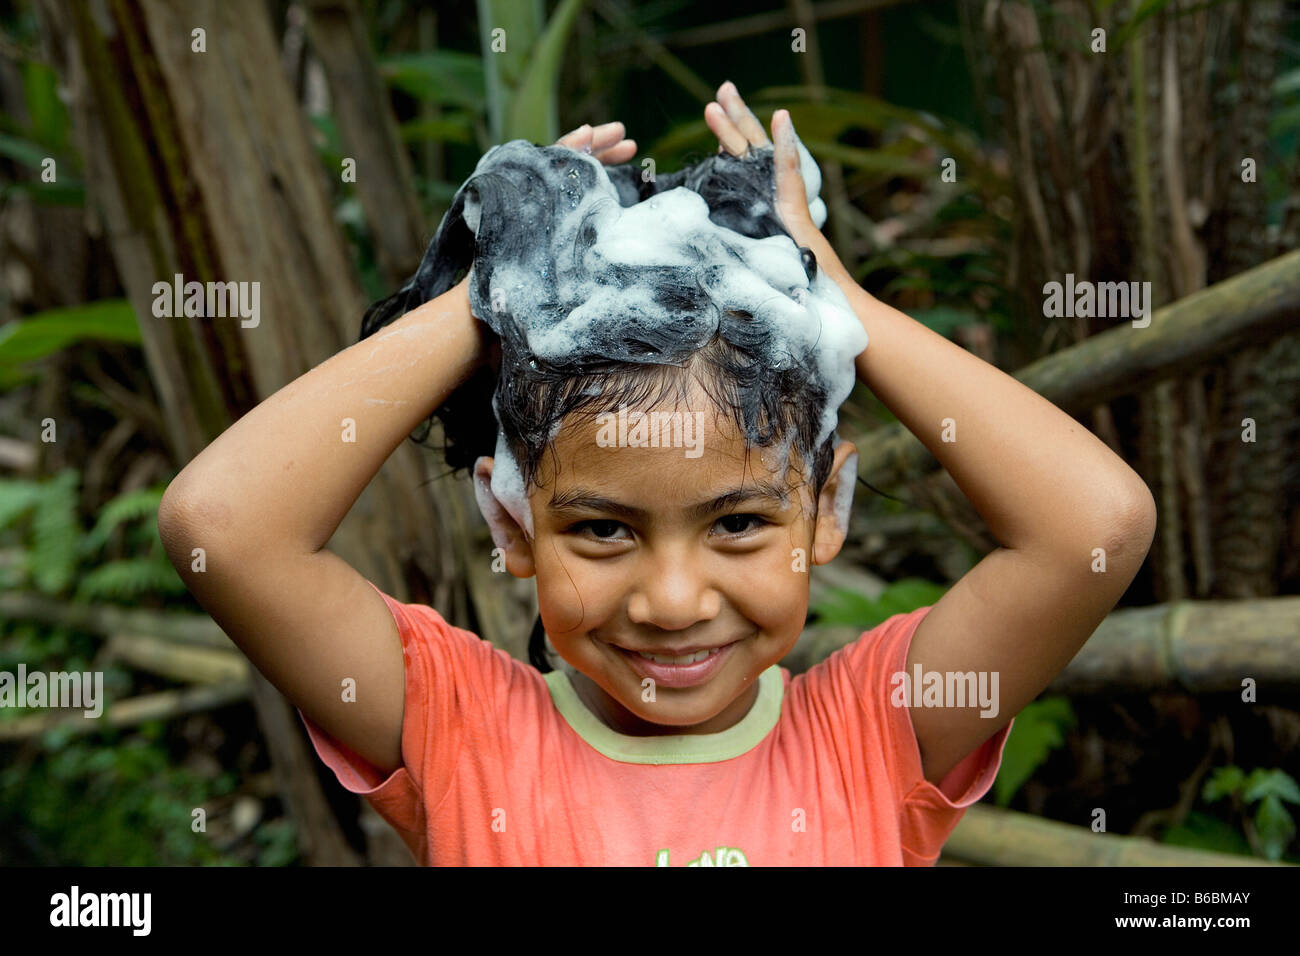 Indonesien, Yogyakarta (Jokjakarta), Java, Haare mit Shampoo waschen Stockfoto